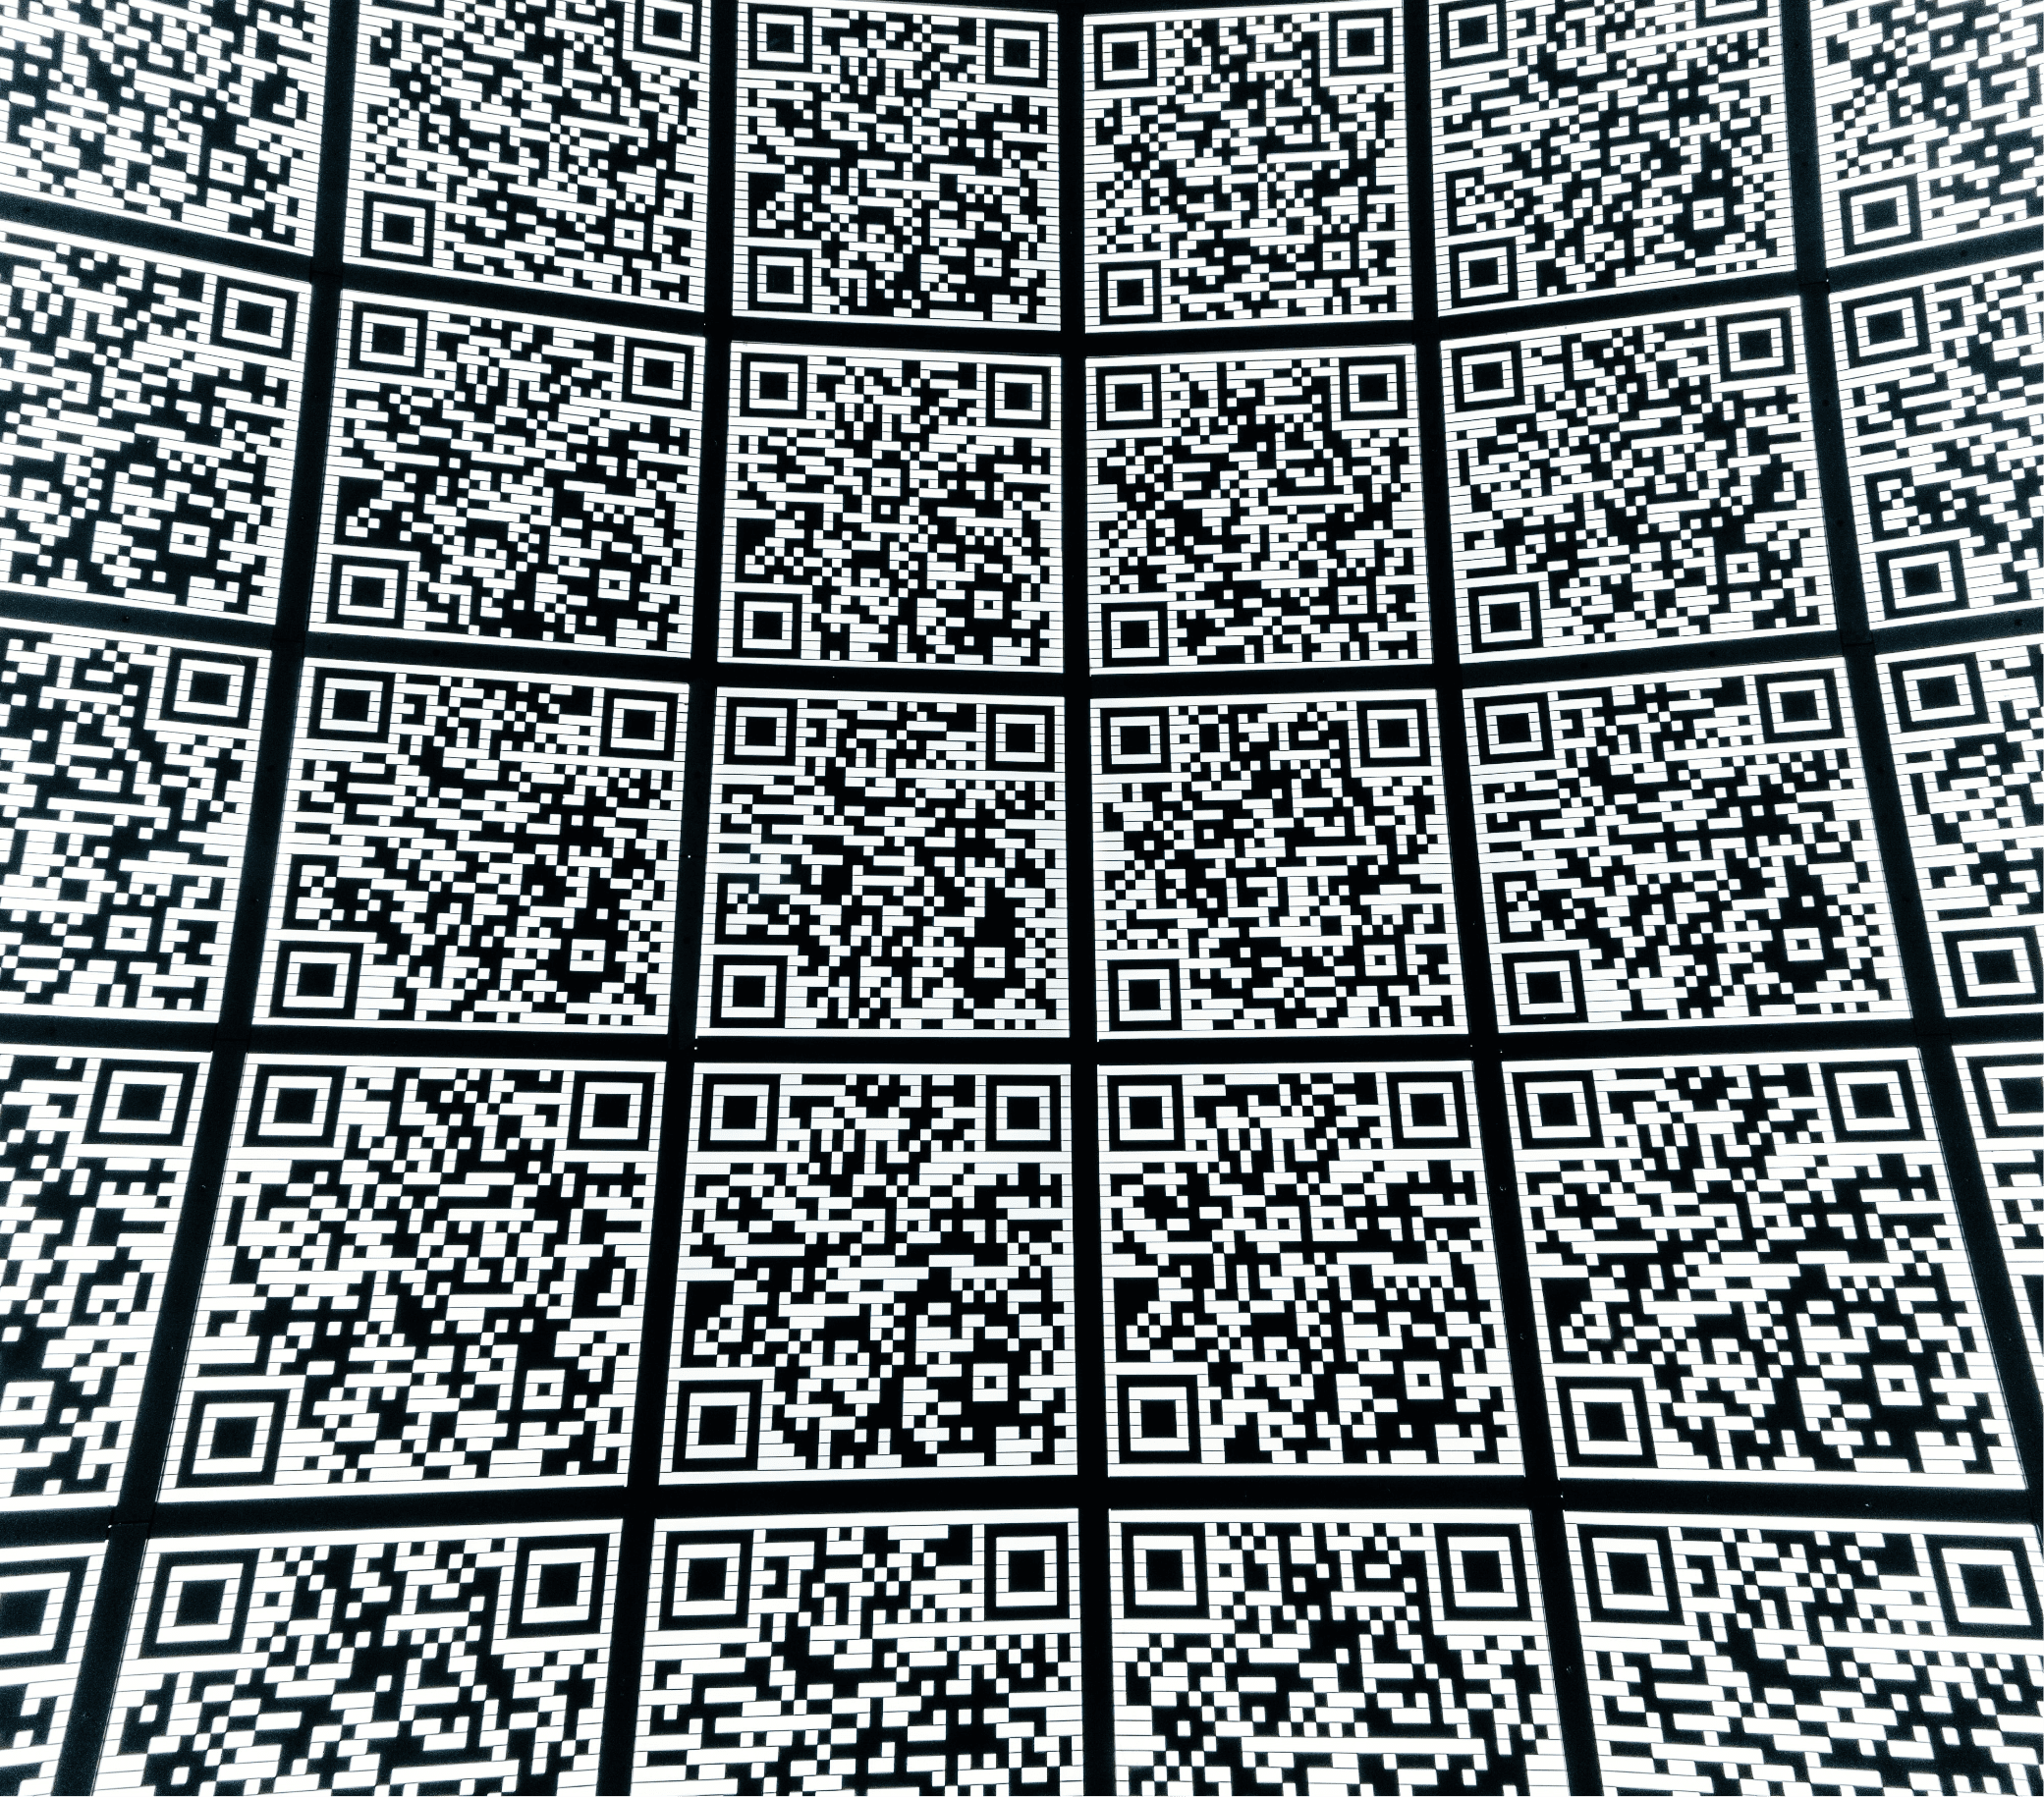 skewed sheet of QR or barcode codes for data input scanning